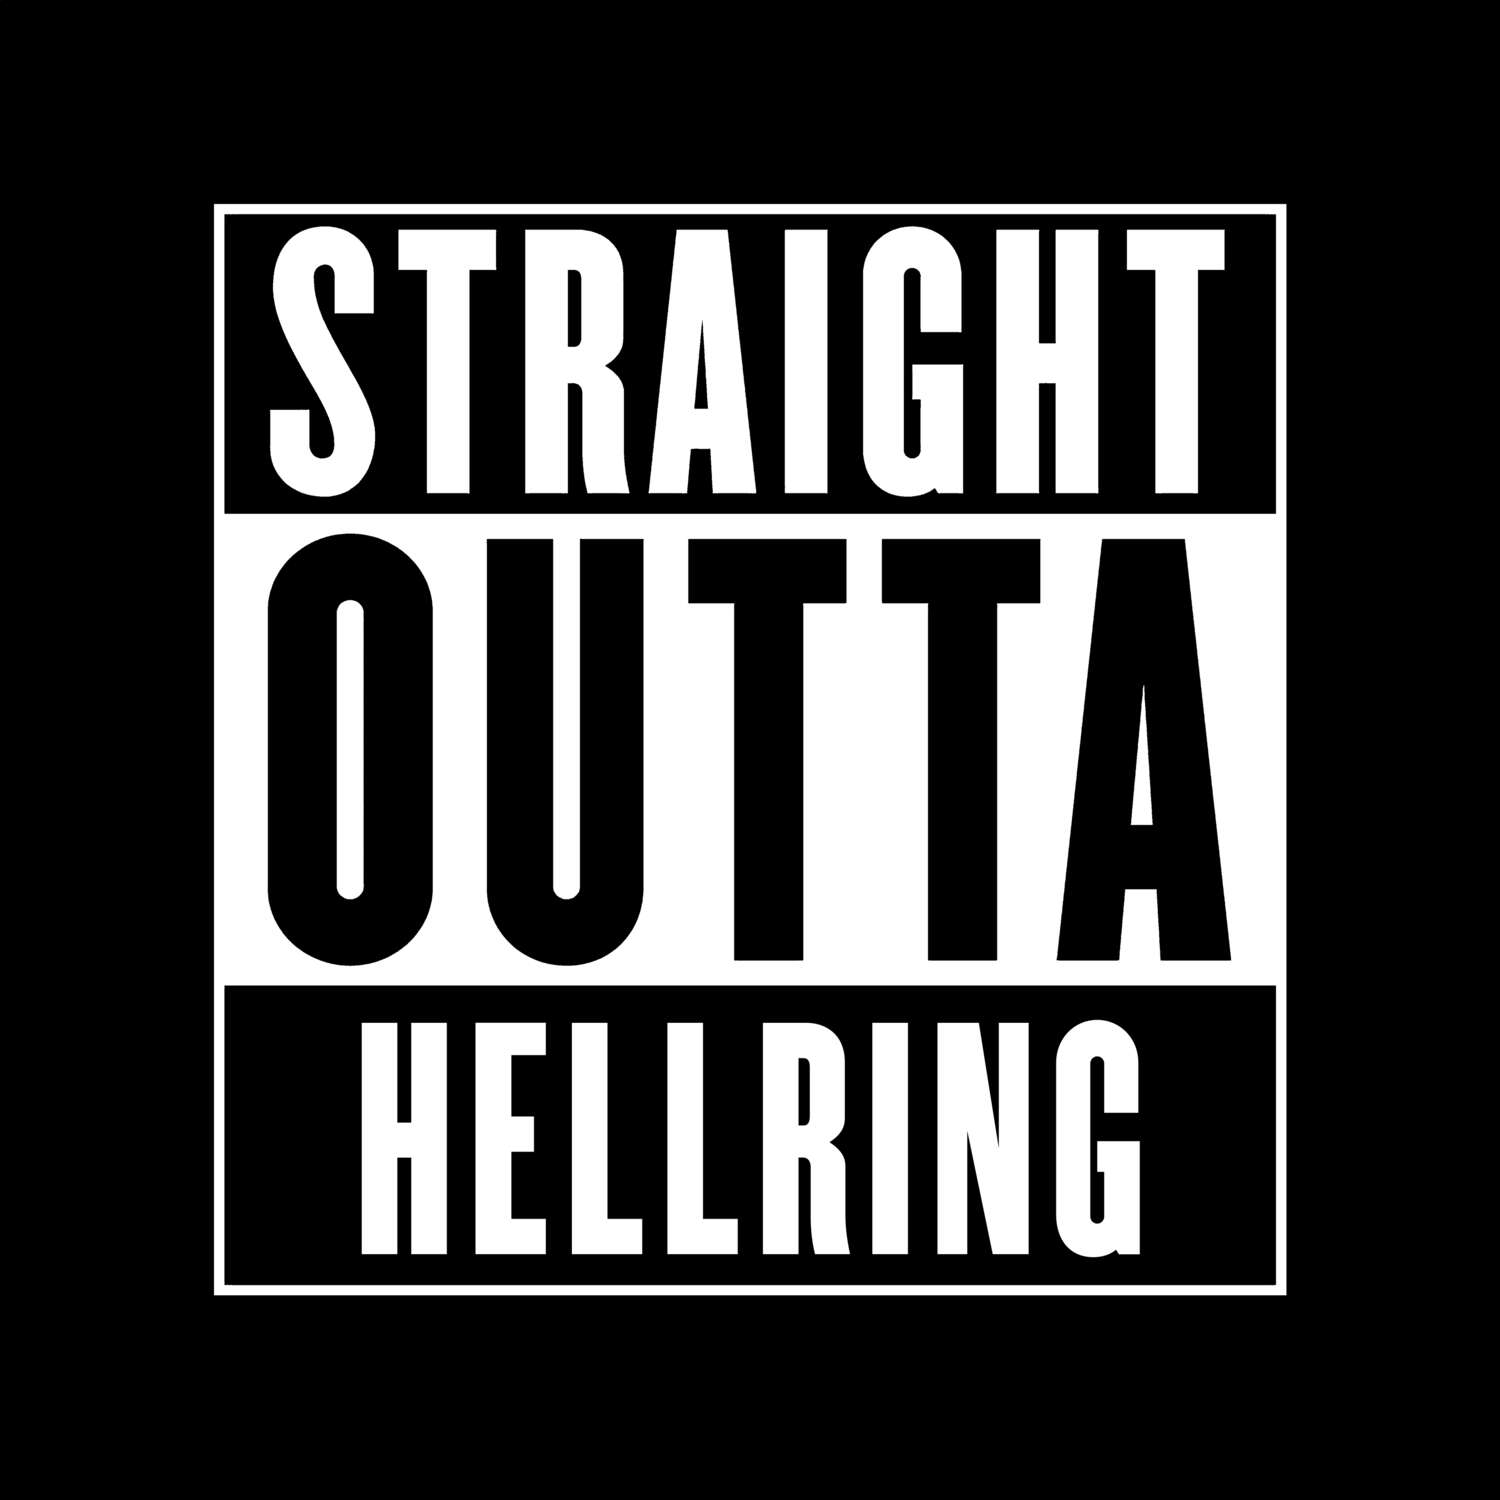 Hellring T-Shirt »Straight Outta«